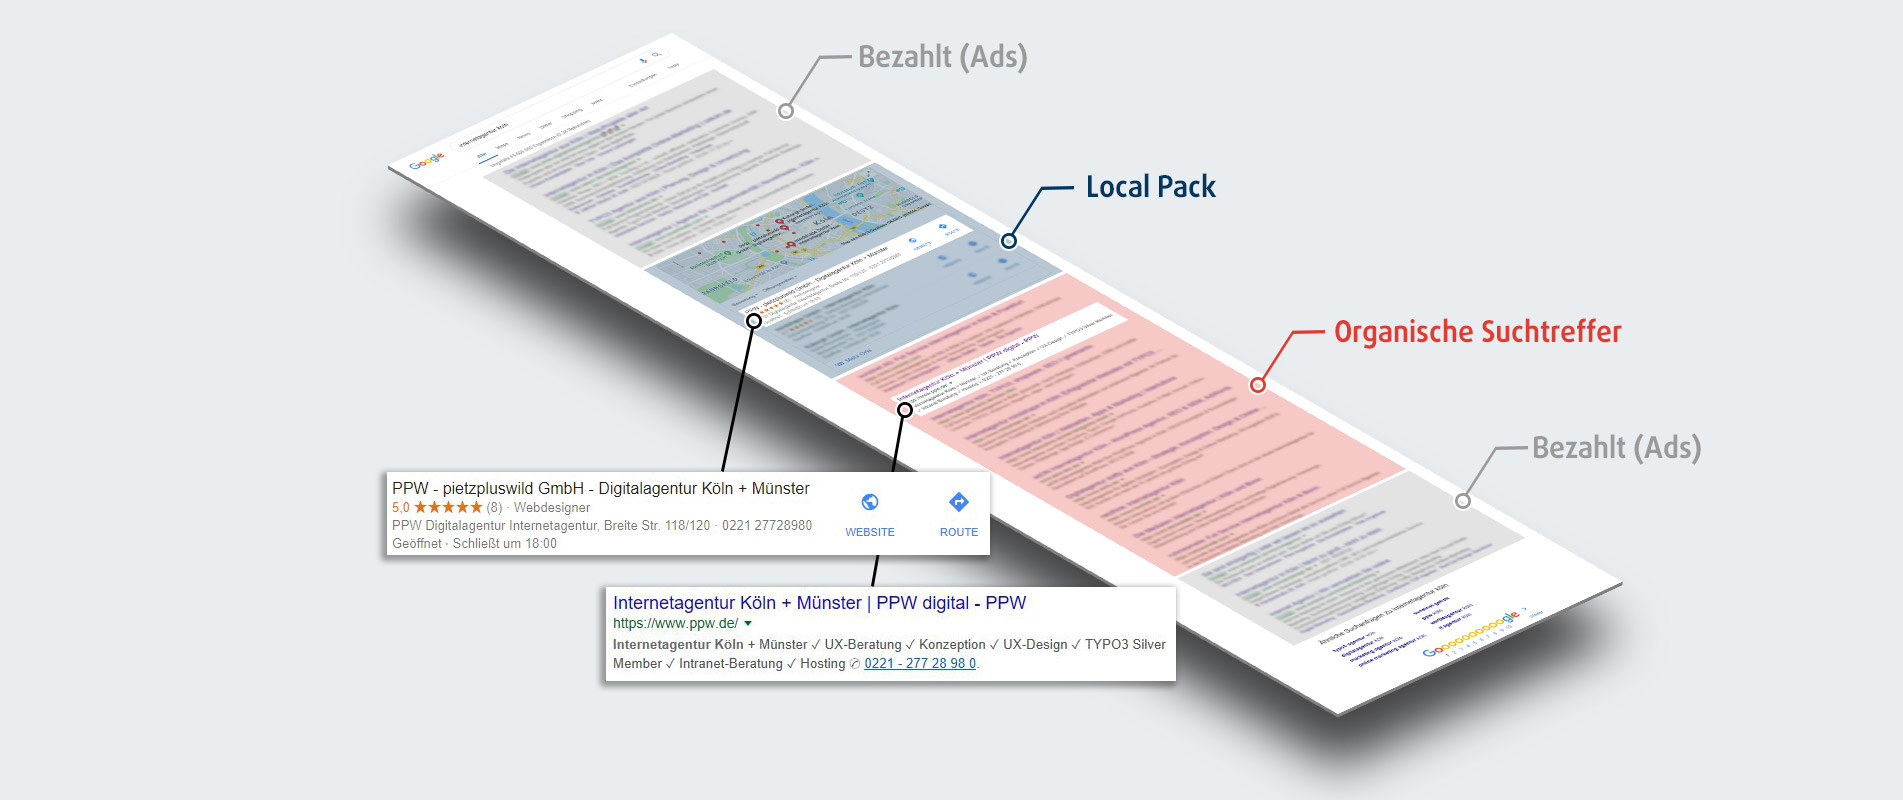 Google SERP Anatomy - SEO Infographic